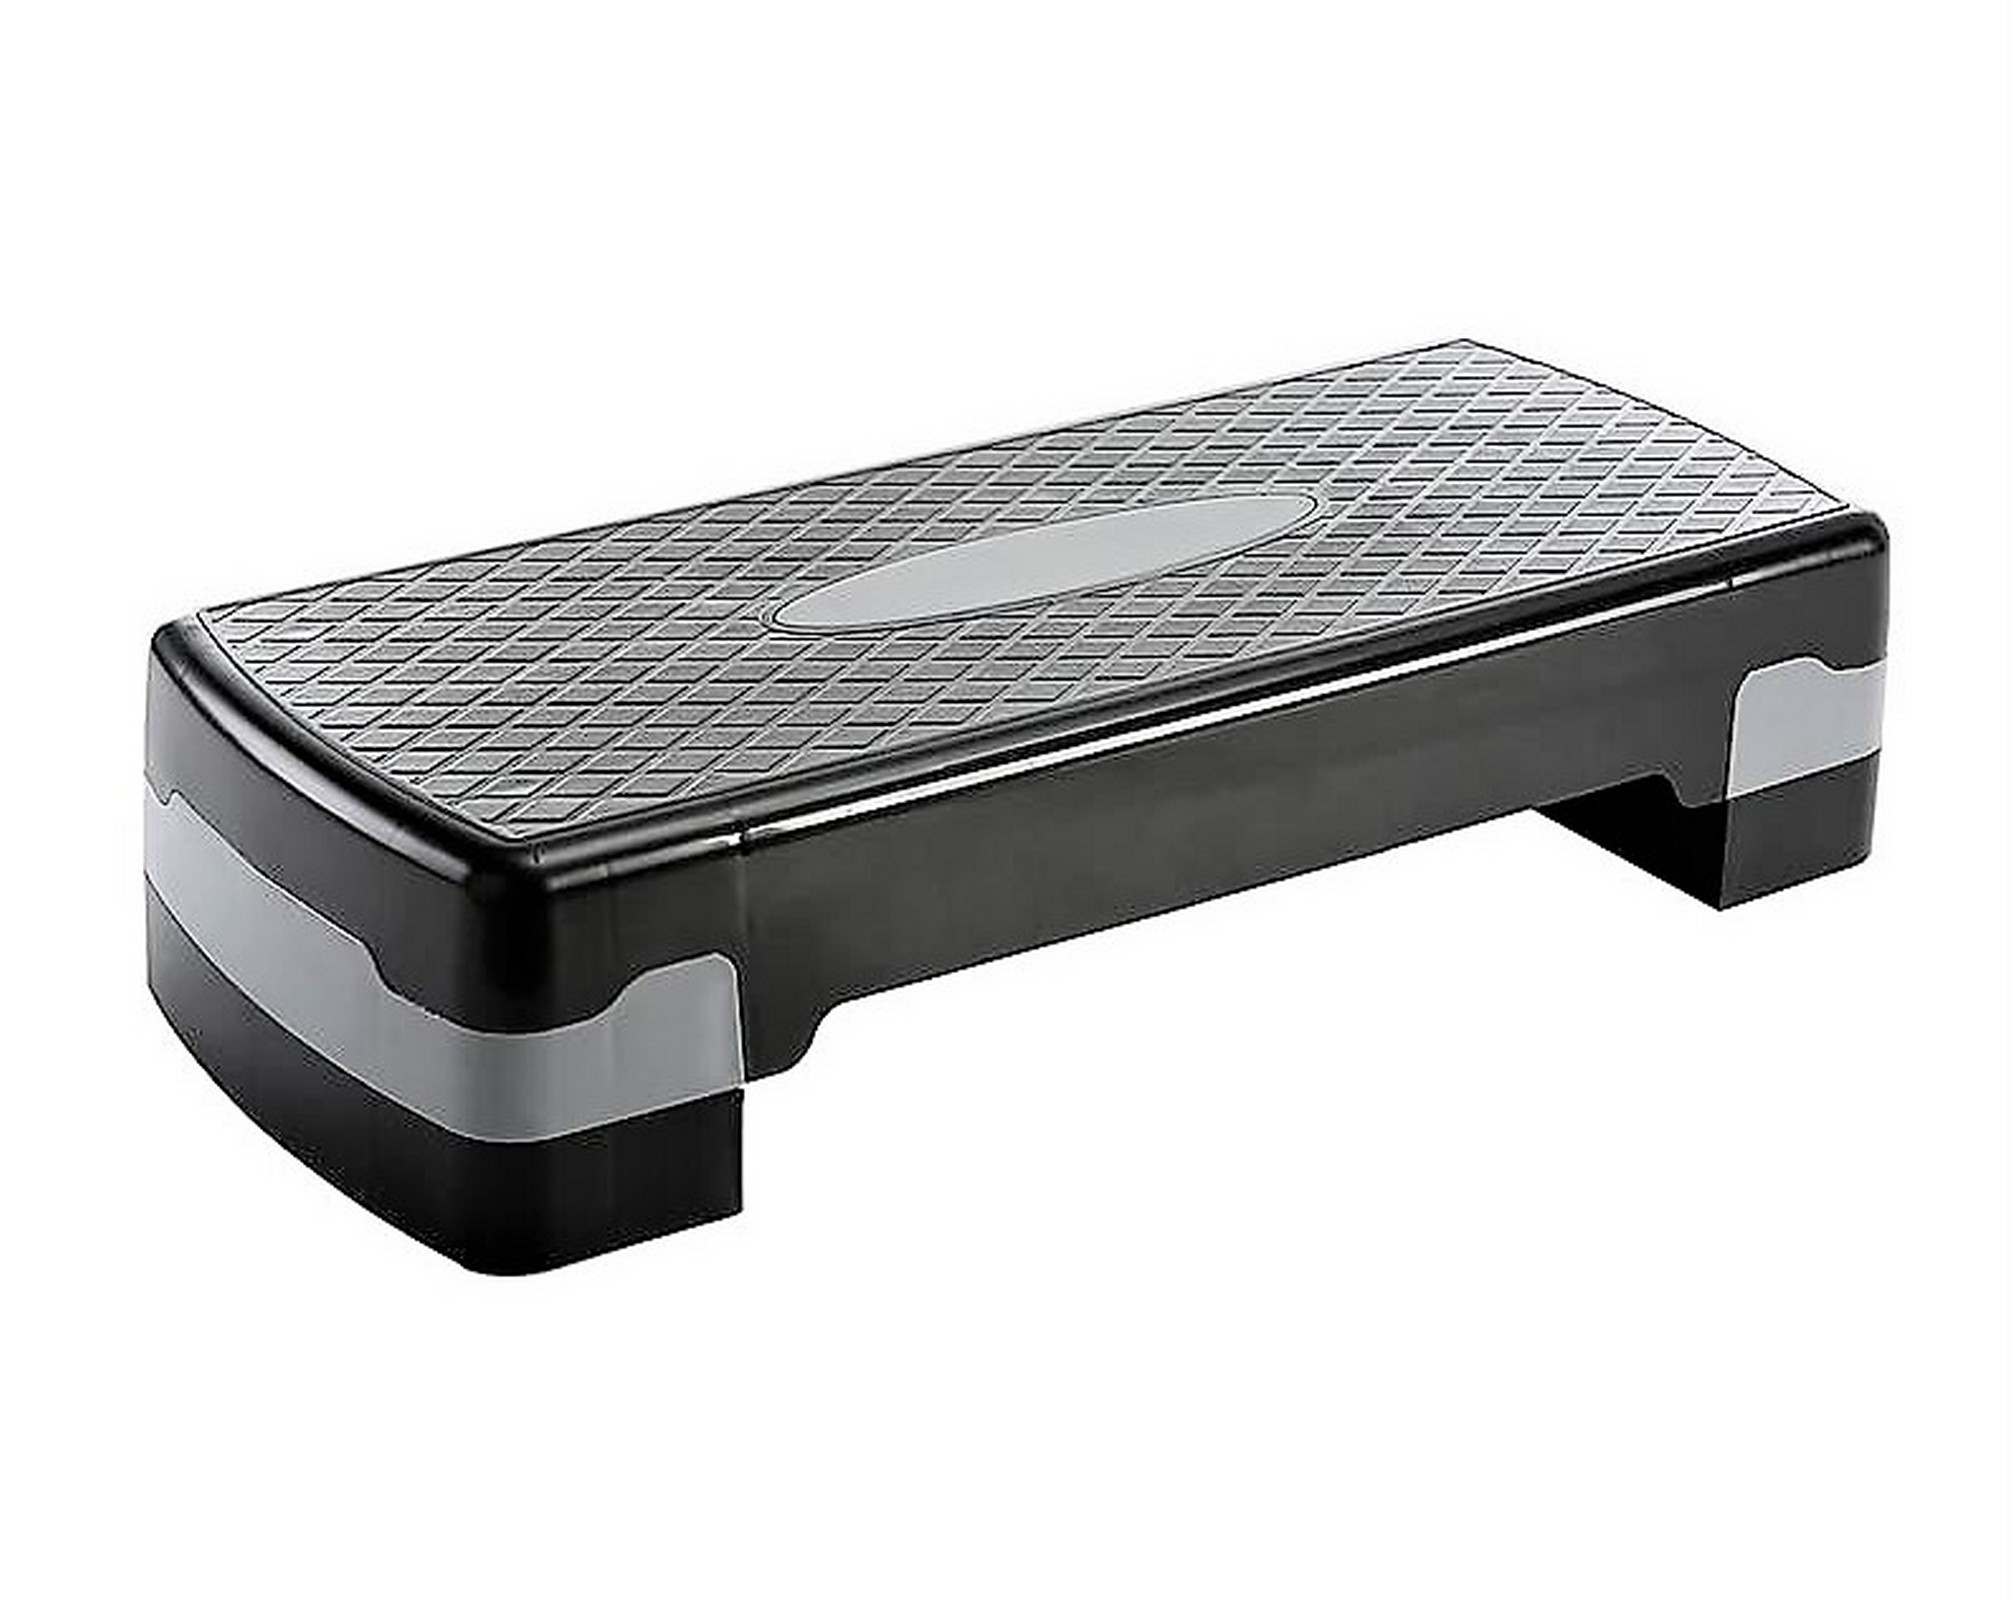 Steppbrett Aerobic Fitness Stepper Board Step-Bench Höhenverstellbar 10-15 cm